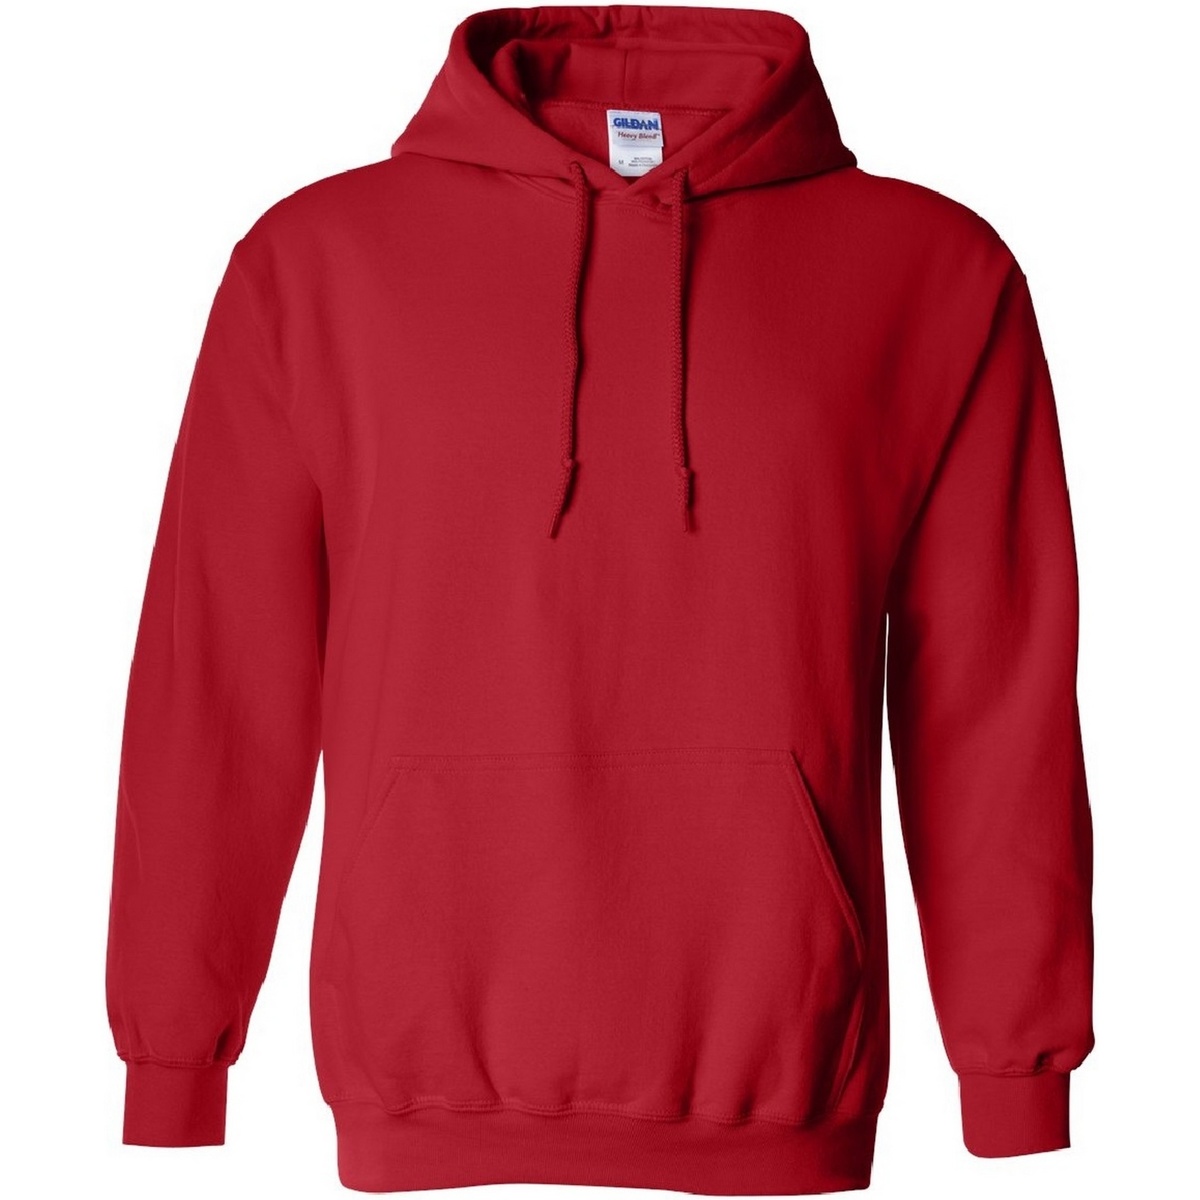 Vêtements Sweats Gildan 18500 Rouge